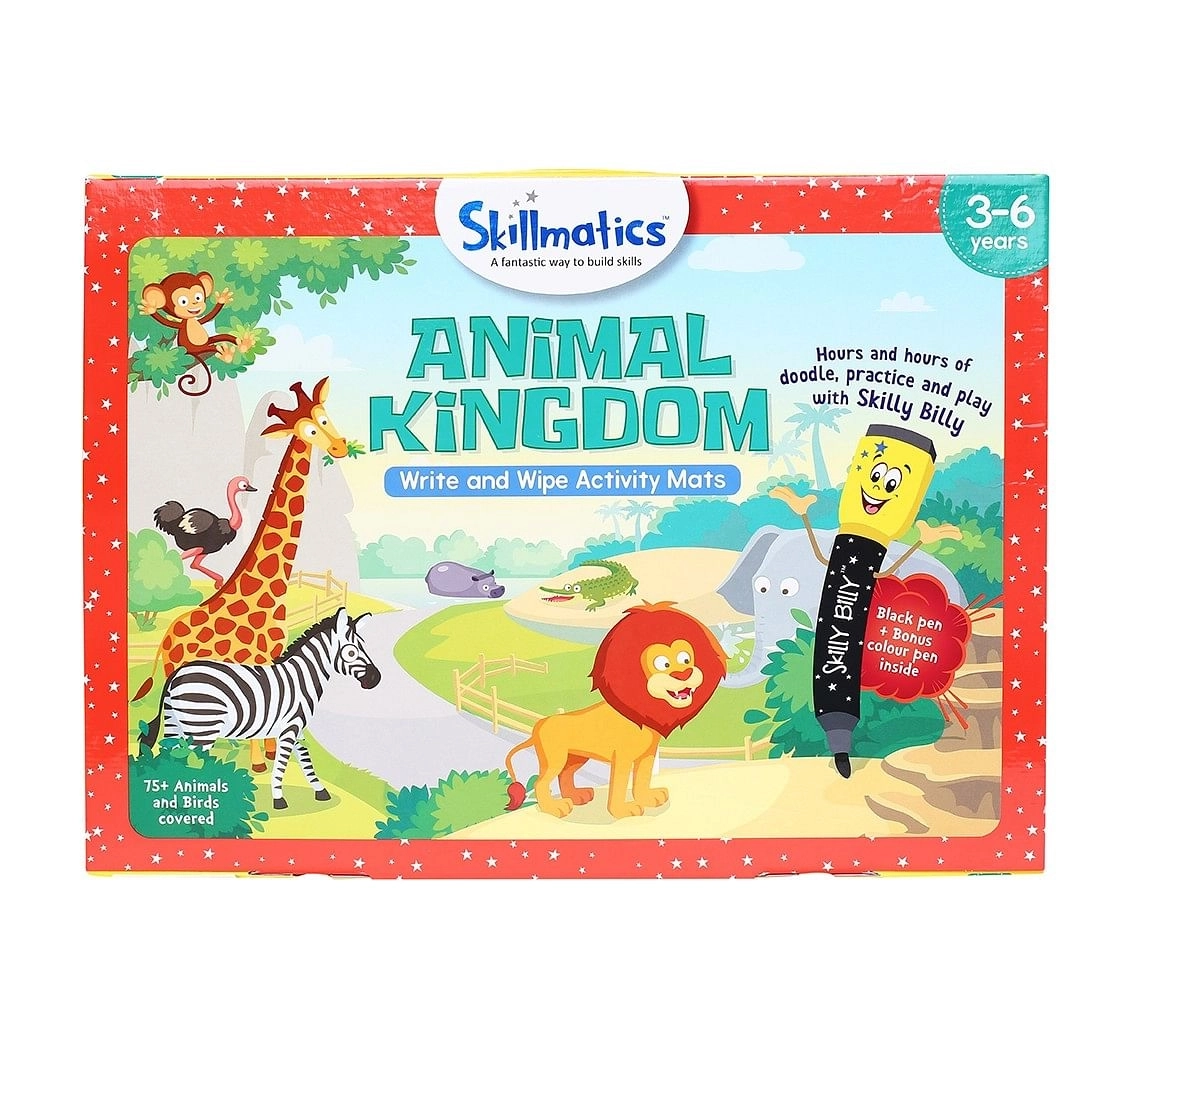  Skillmatics Educational Game: Animal Kingdom, 3-6 Years Games for Kids age 3Y+ 